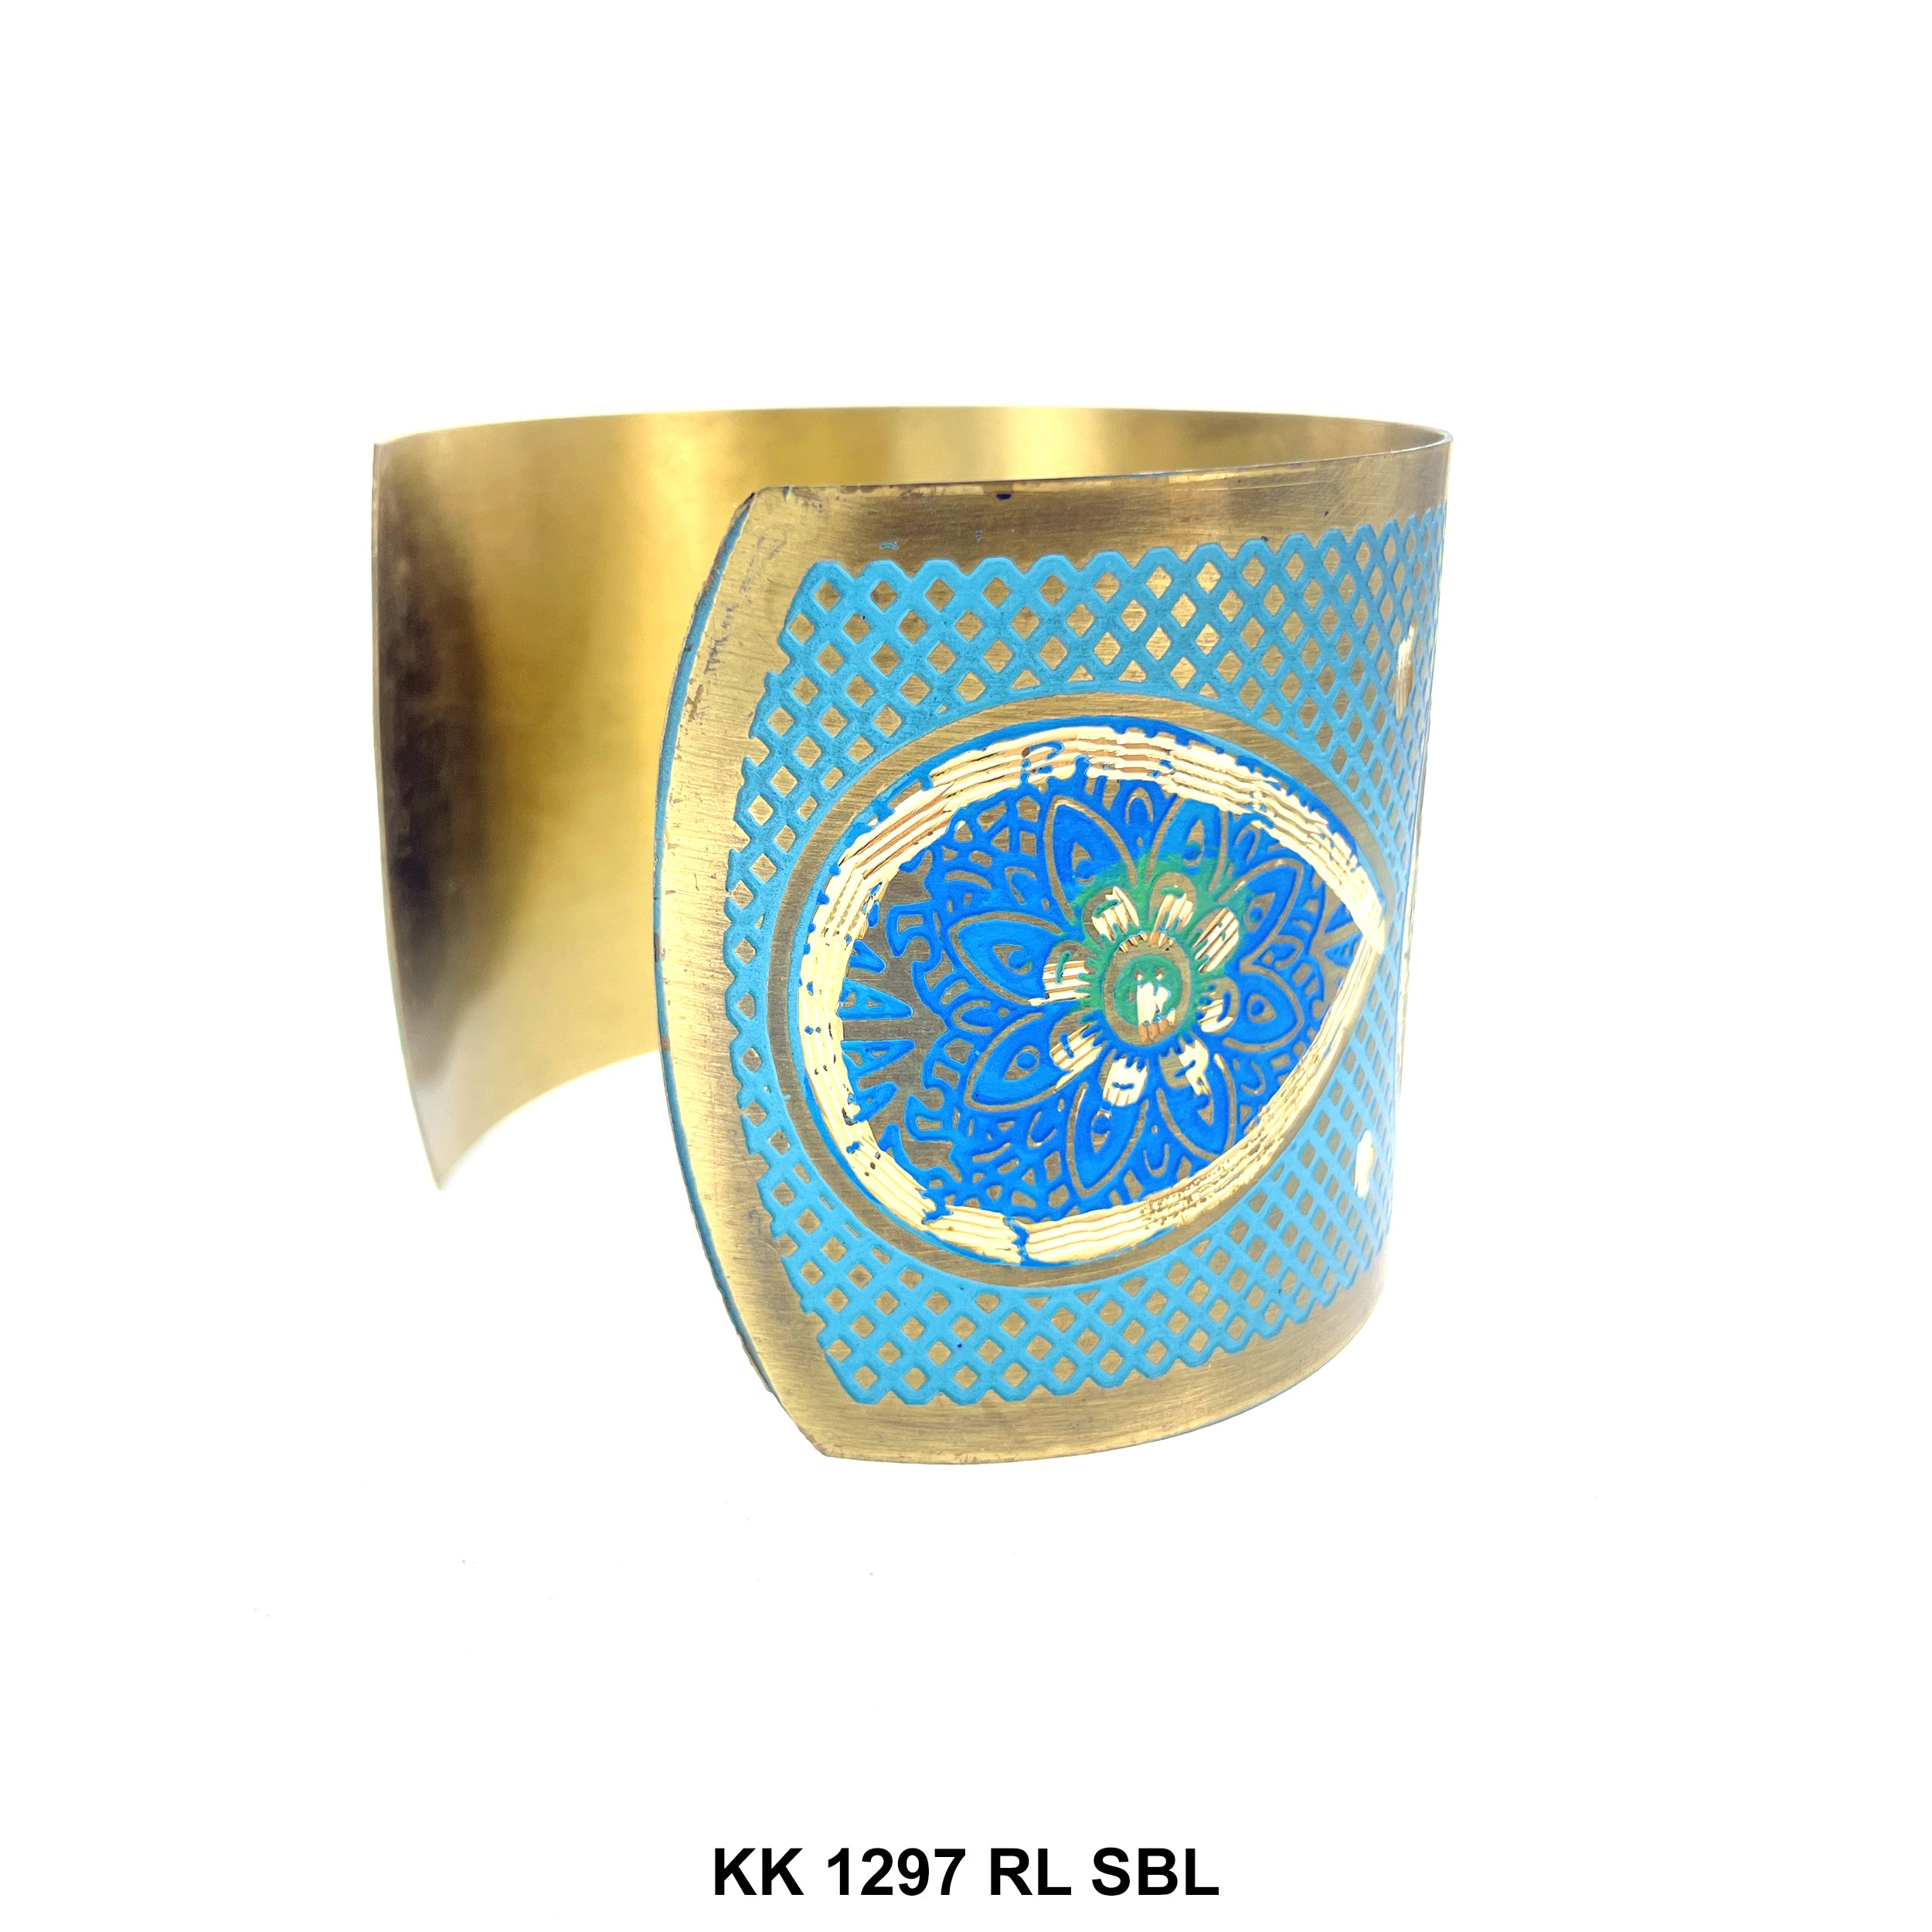 Hand Engraved Cuff Bangle Bracelet KK 1297 RN SBL